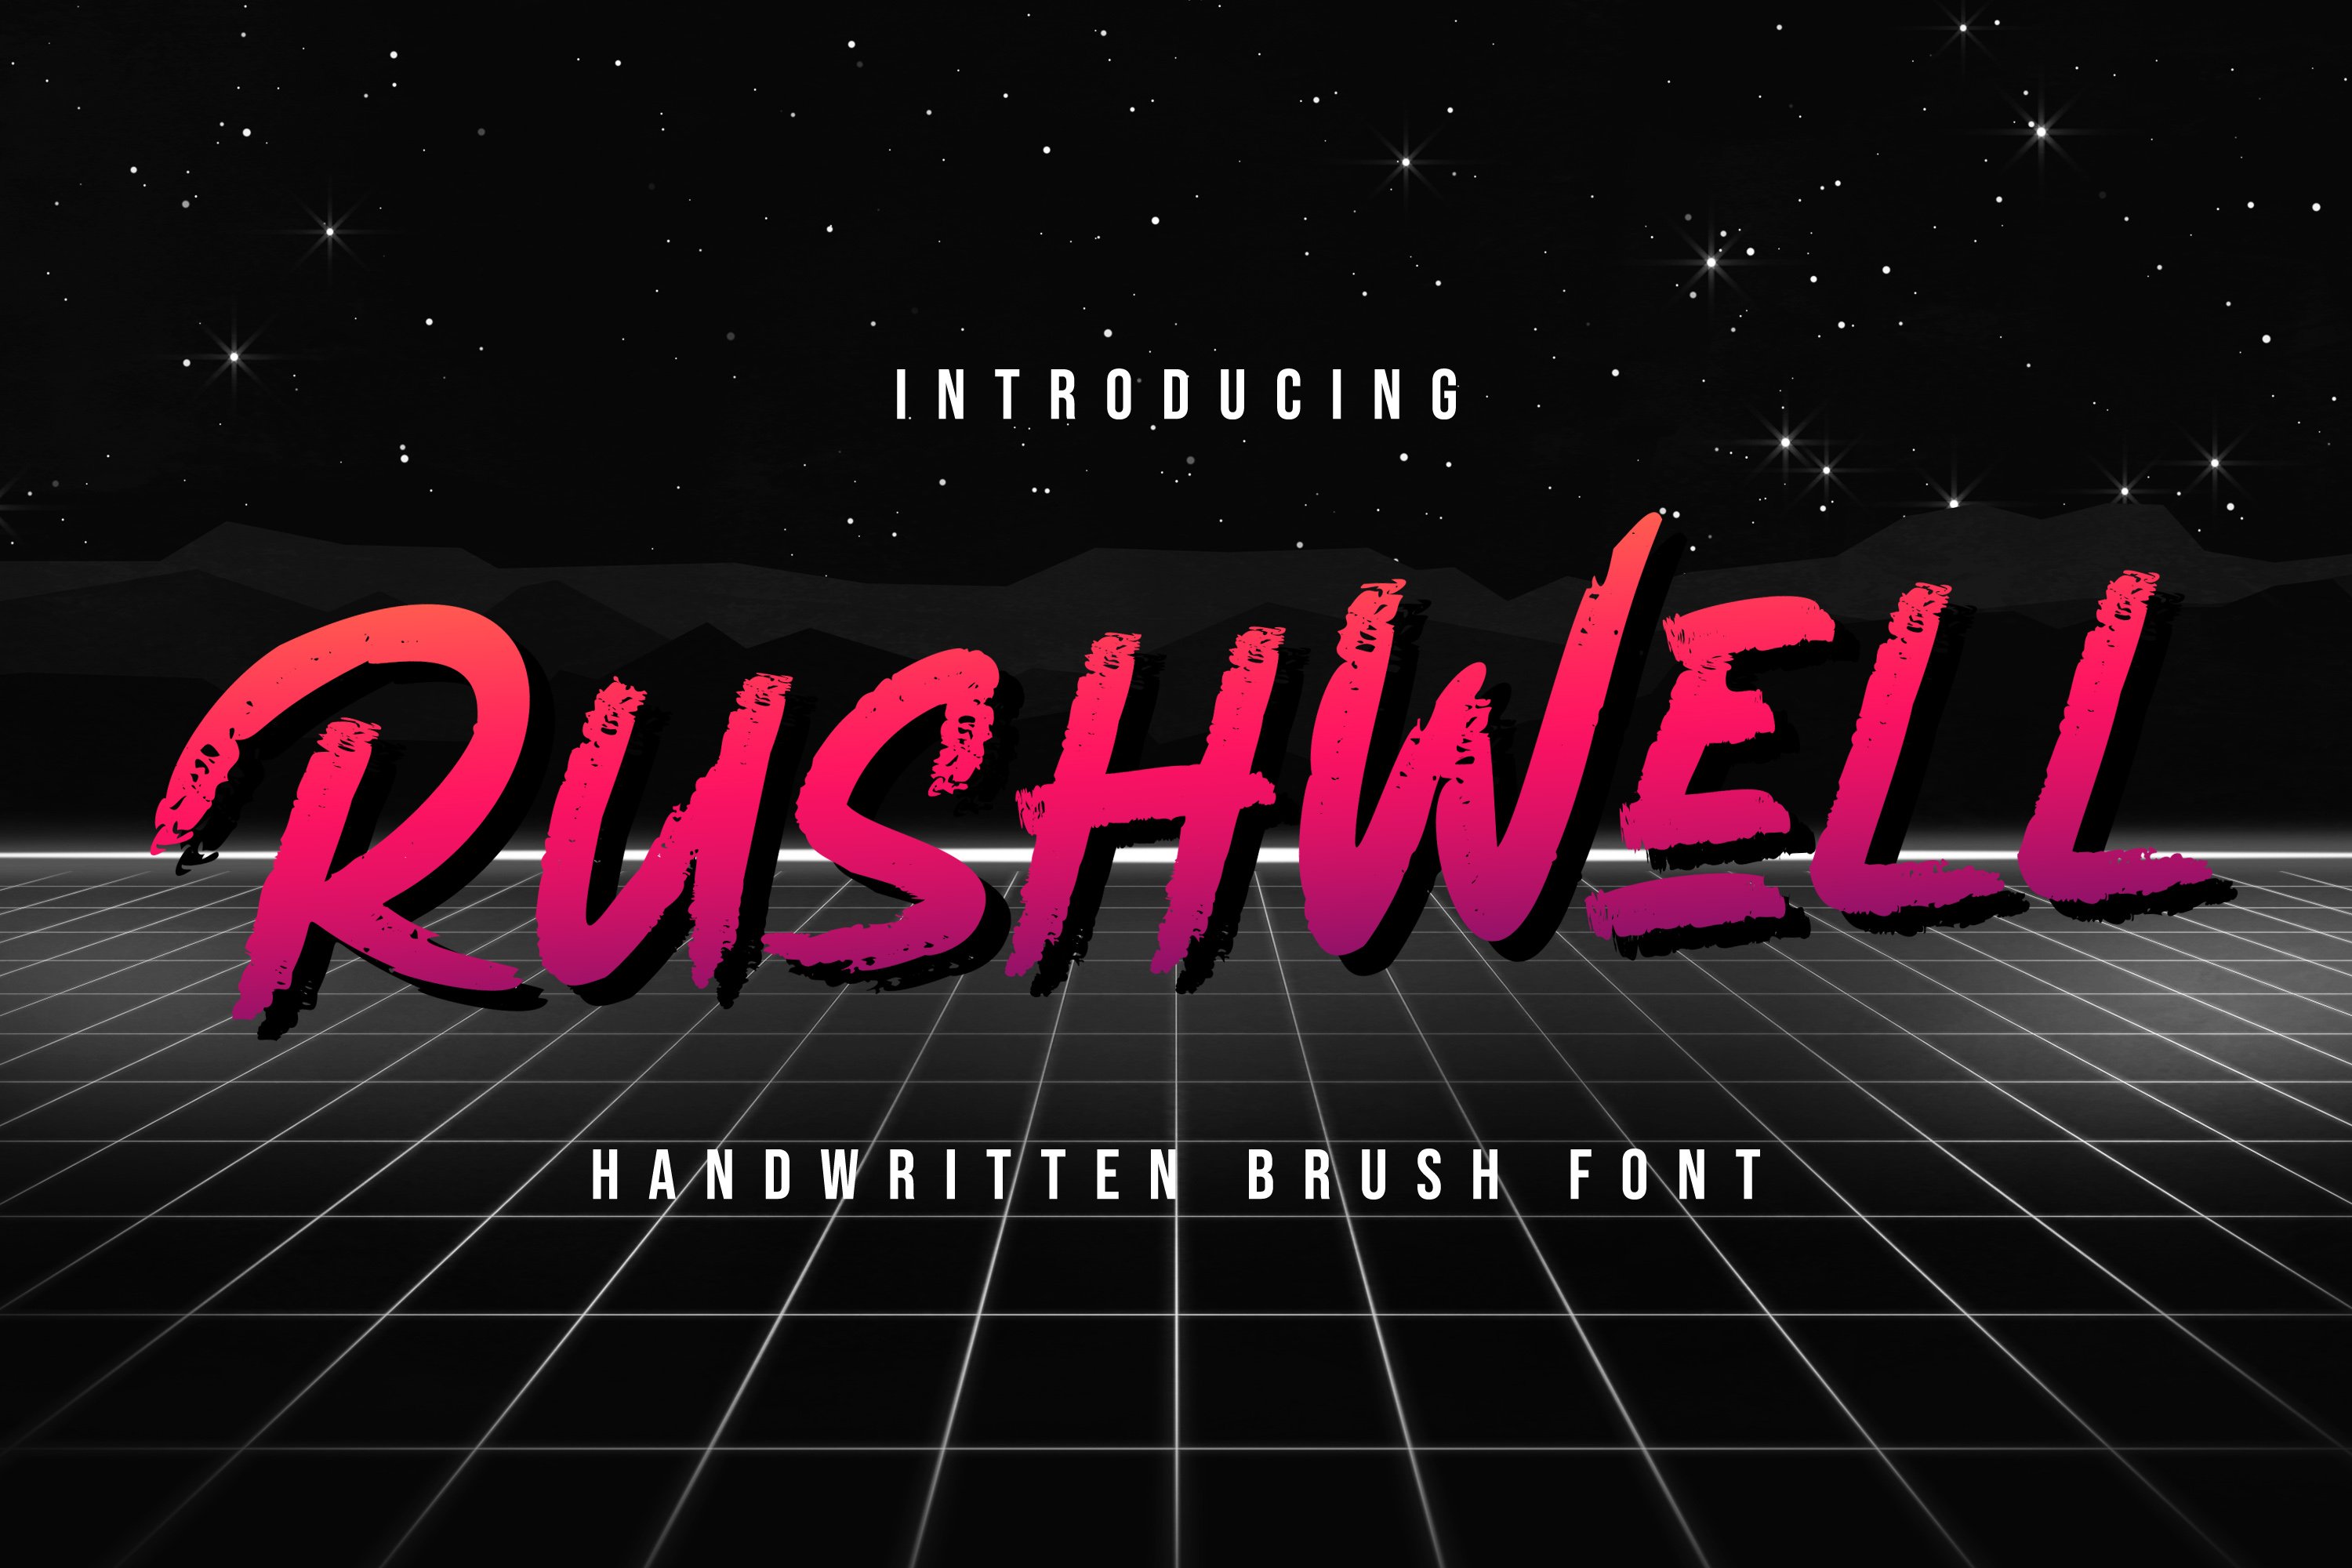 Rushwell - Brush Font cover image.